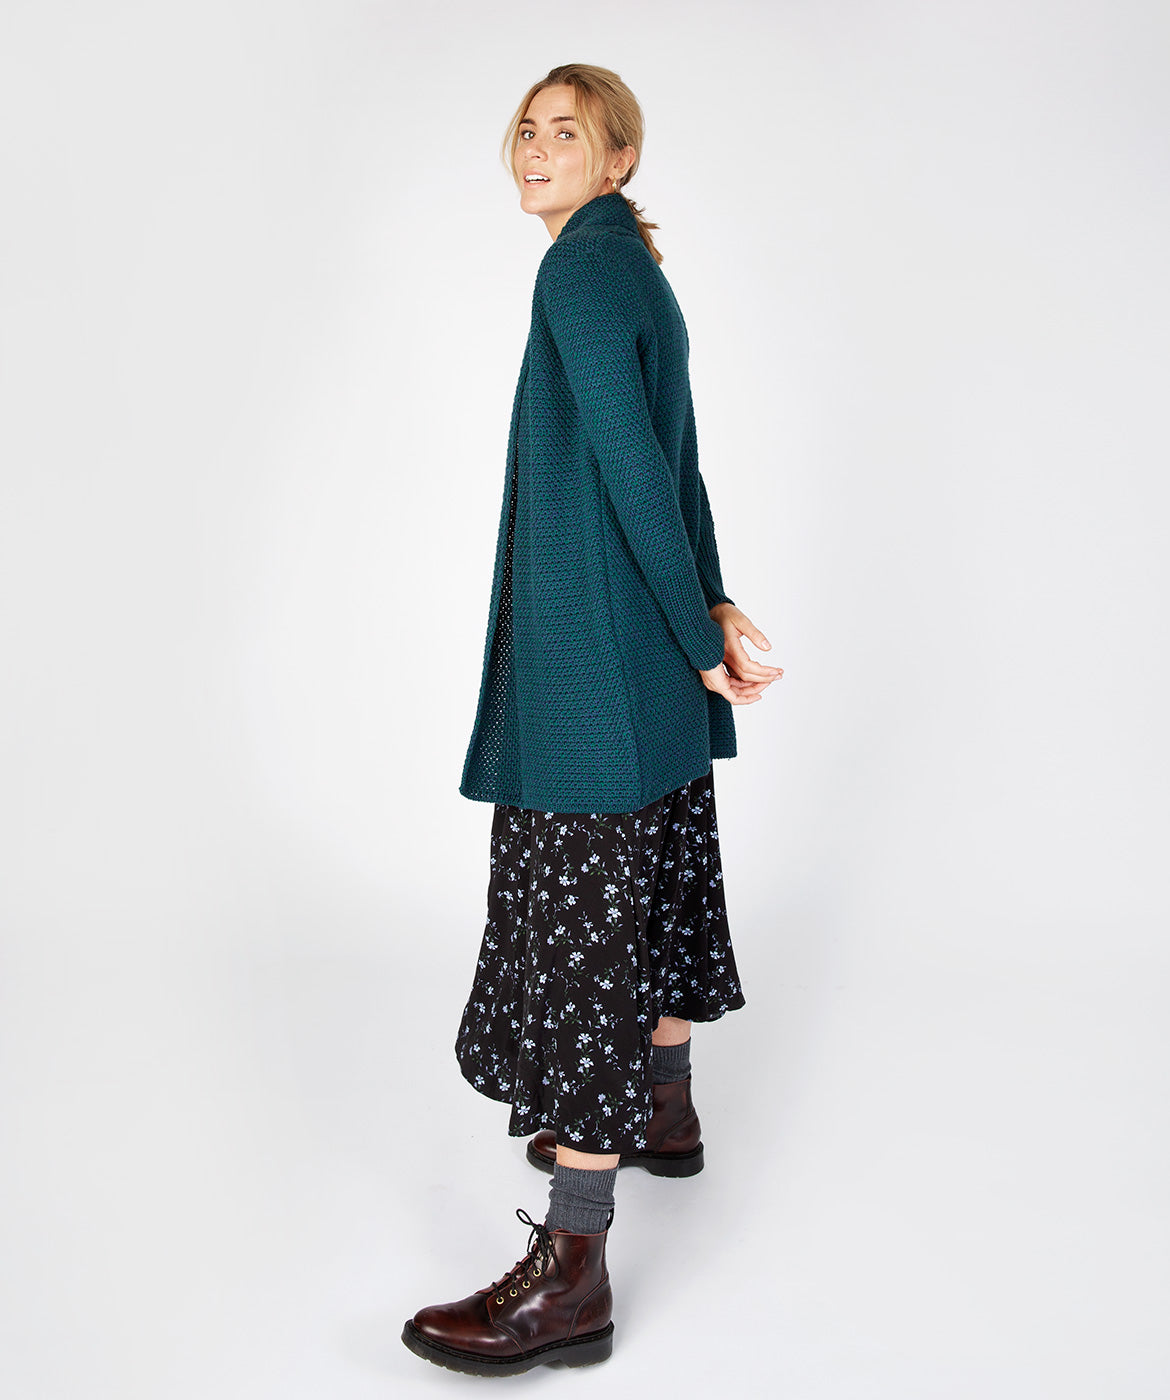 Women's Merino Wool Textured Long Cardigan